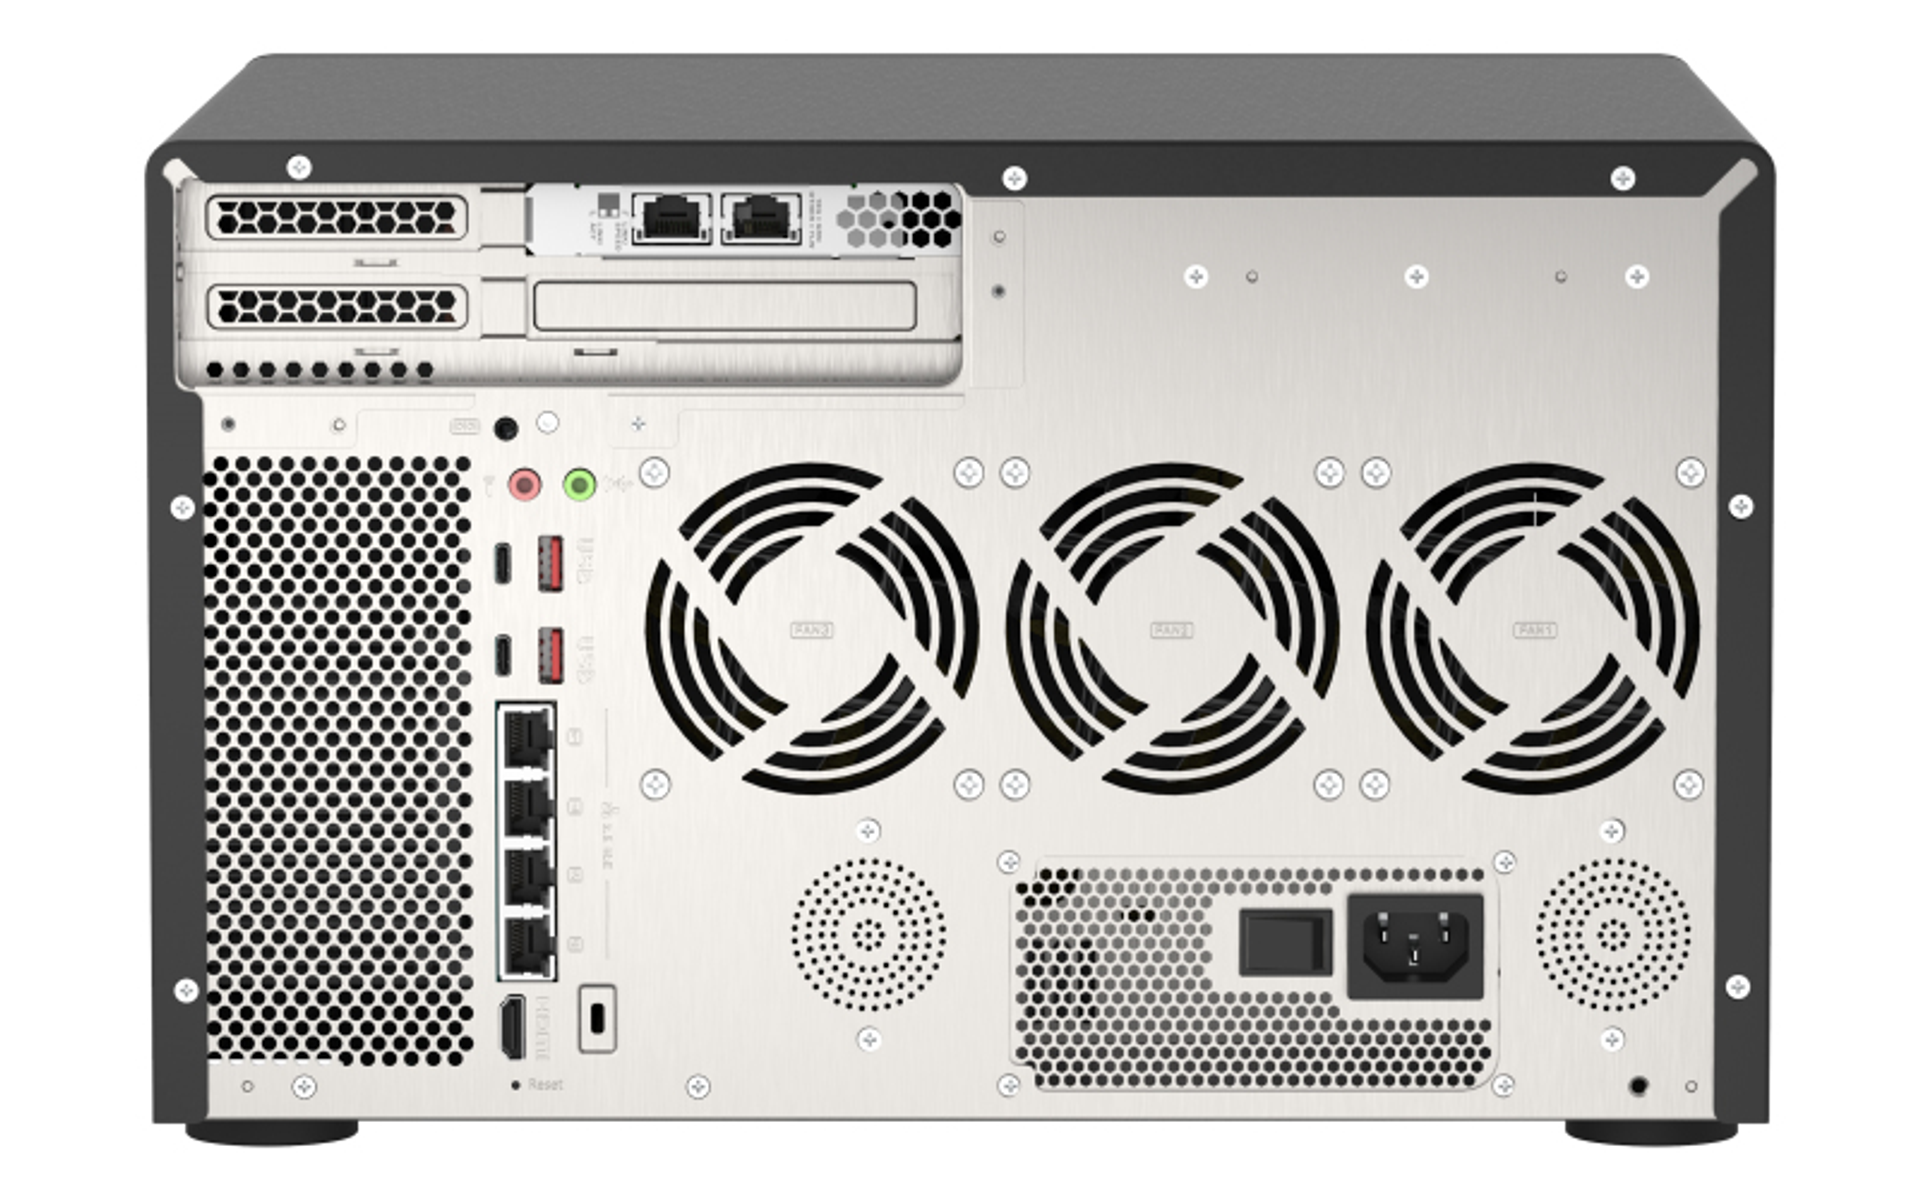 QNAP SYSTEMS TVS-h1288X-W1250-16G Zoll 3,5 TB 0